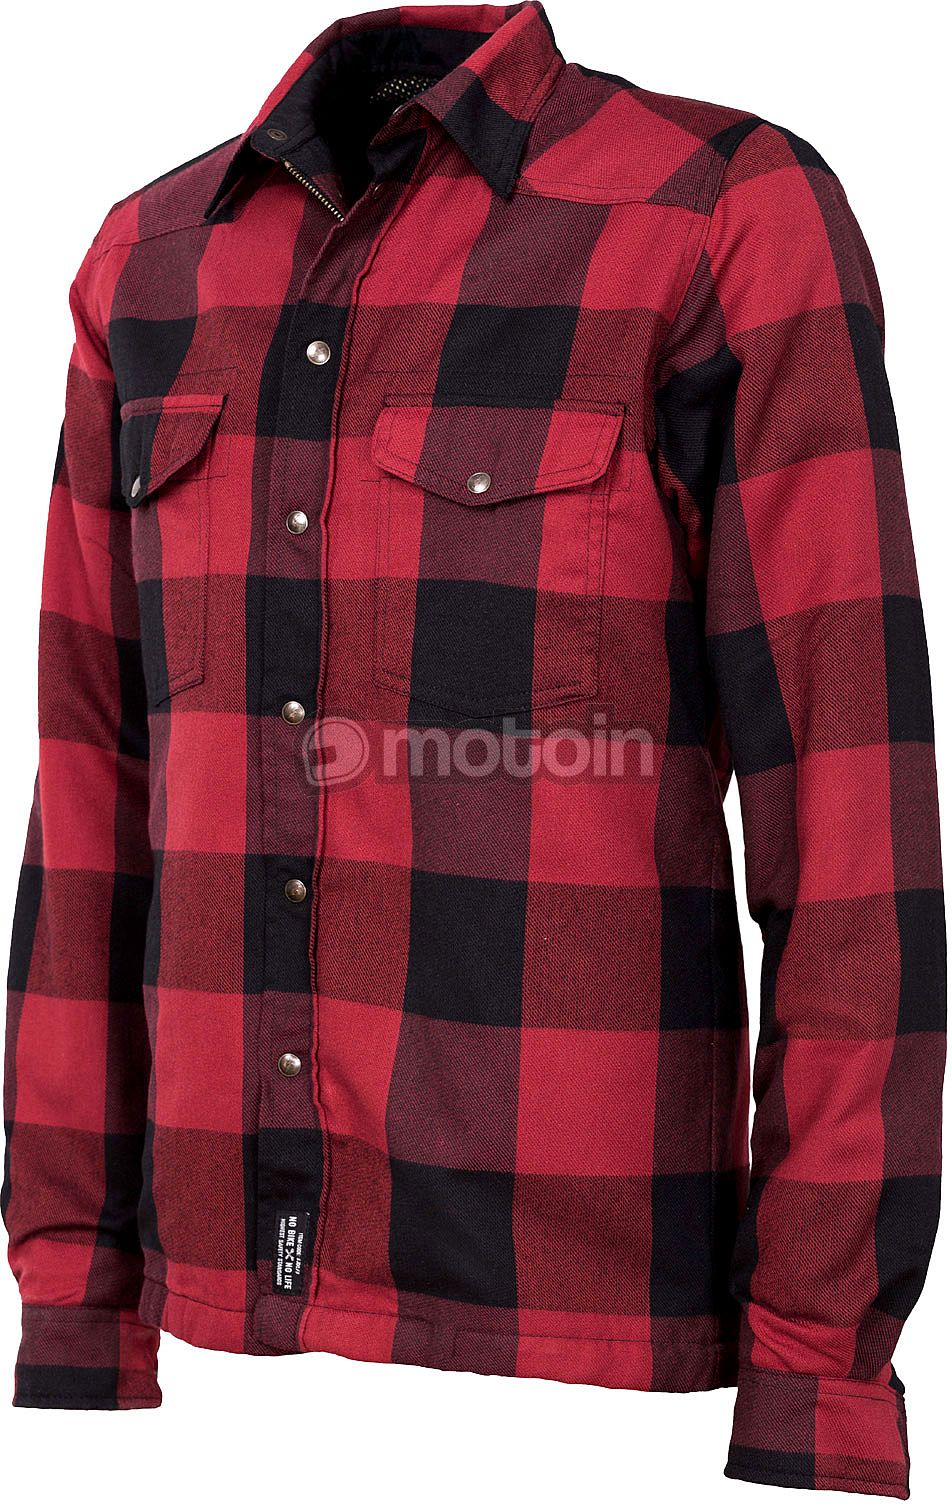 John Doe Motoshirt, Hemd/Textiljacke